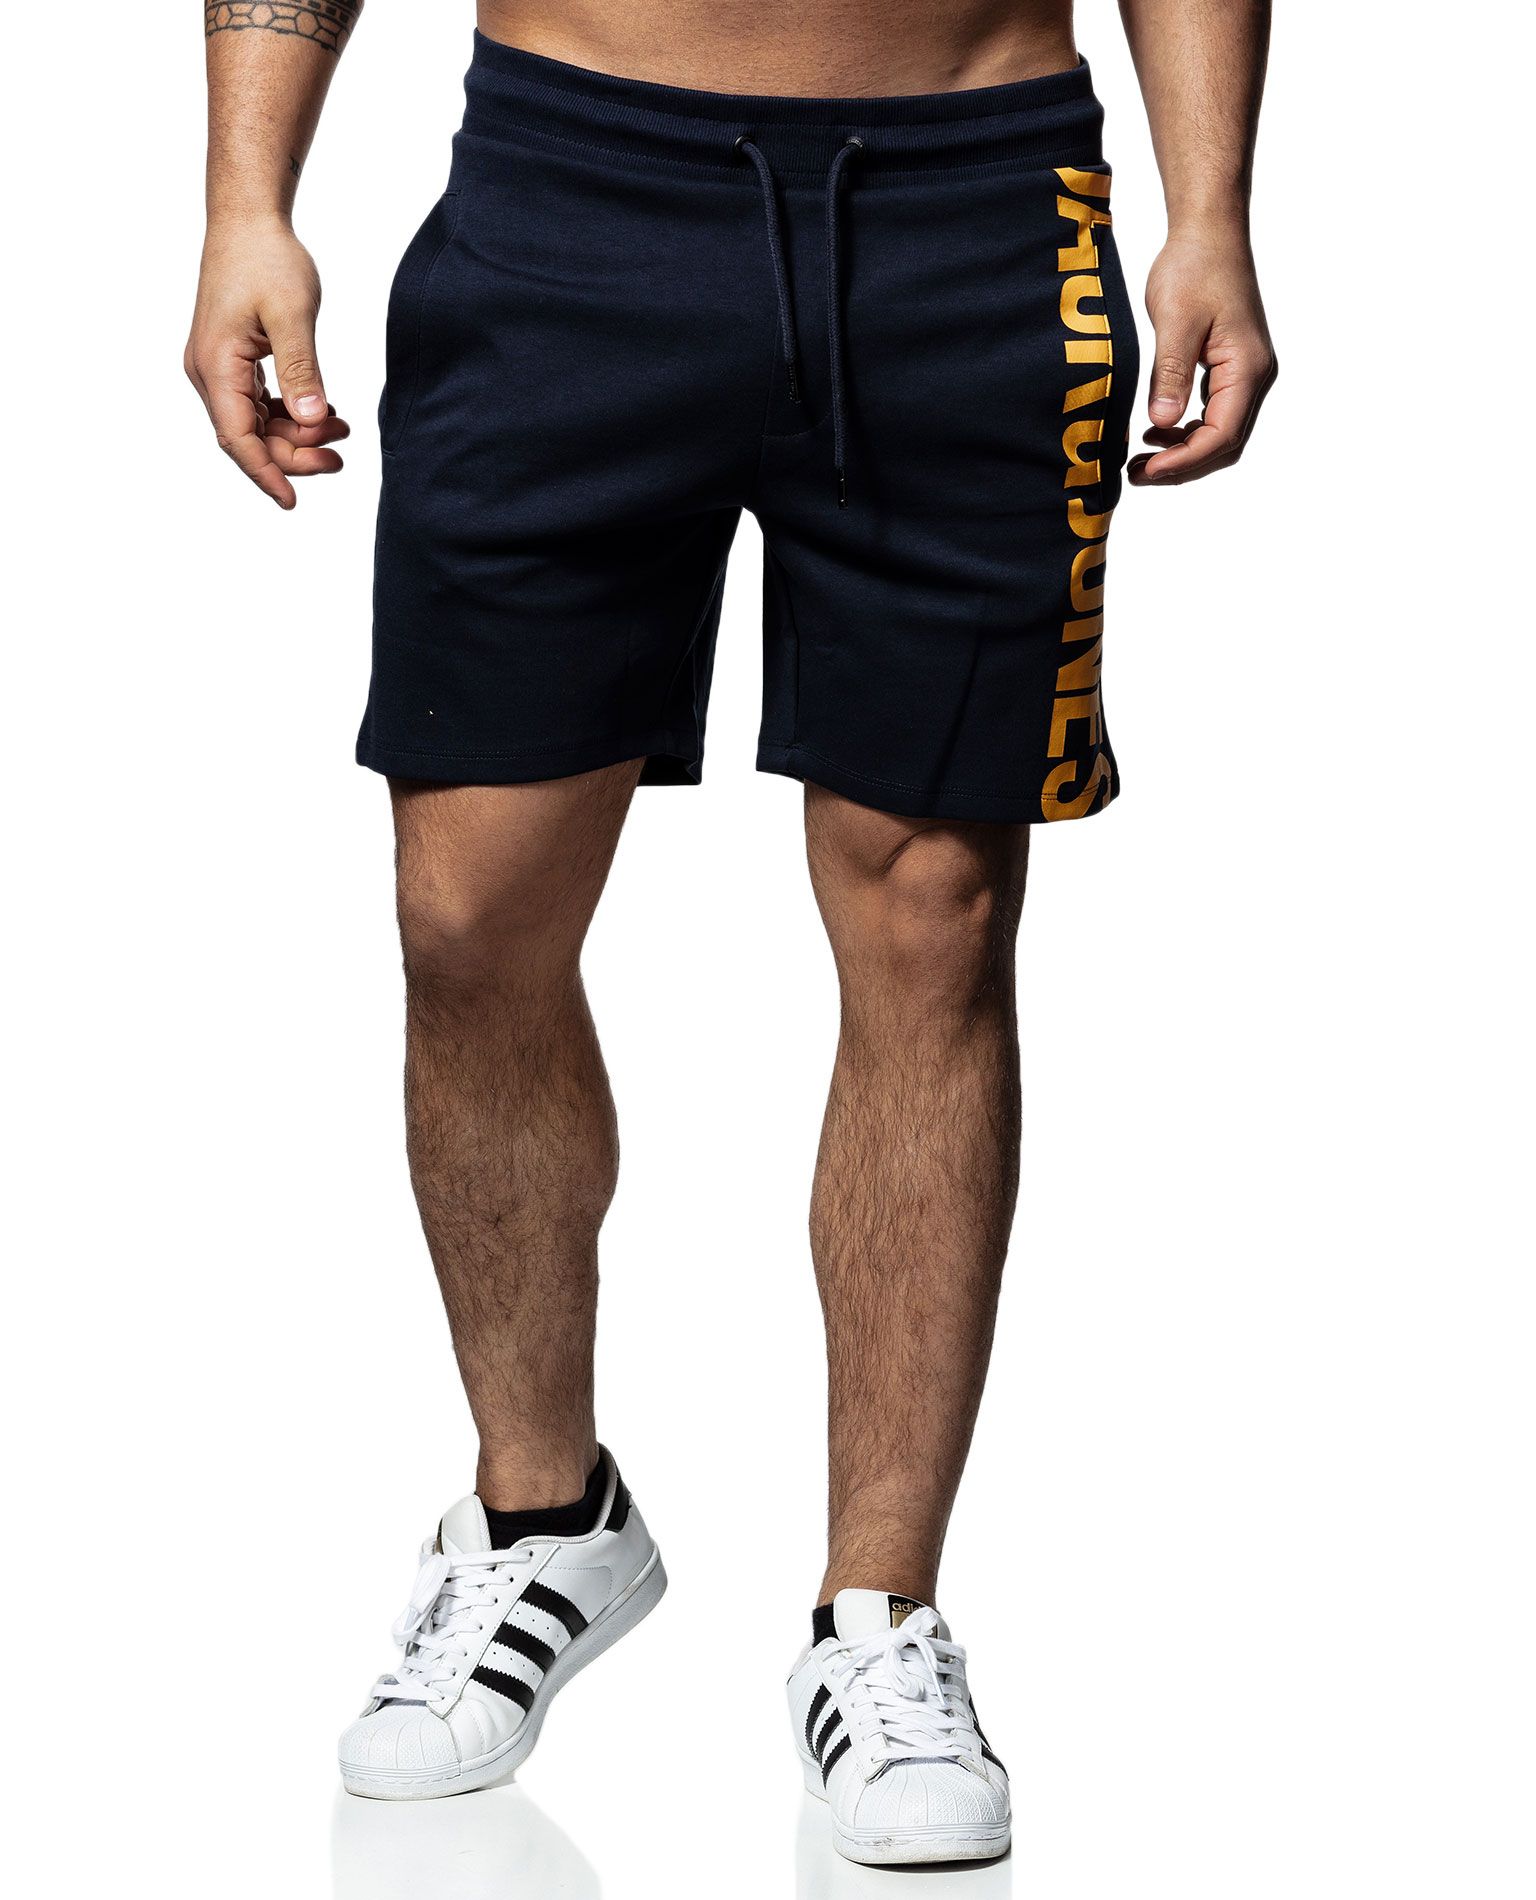 Pops Sweat Shorts Navy Jack & Jones - 6137 - Shorts - Jerone.com